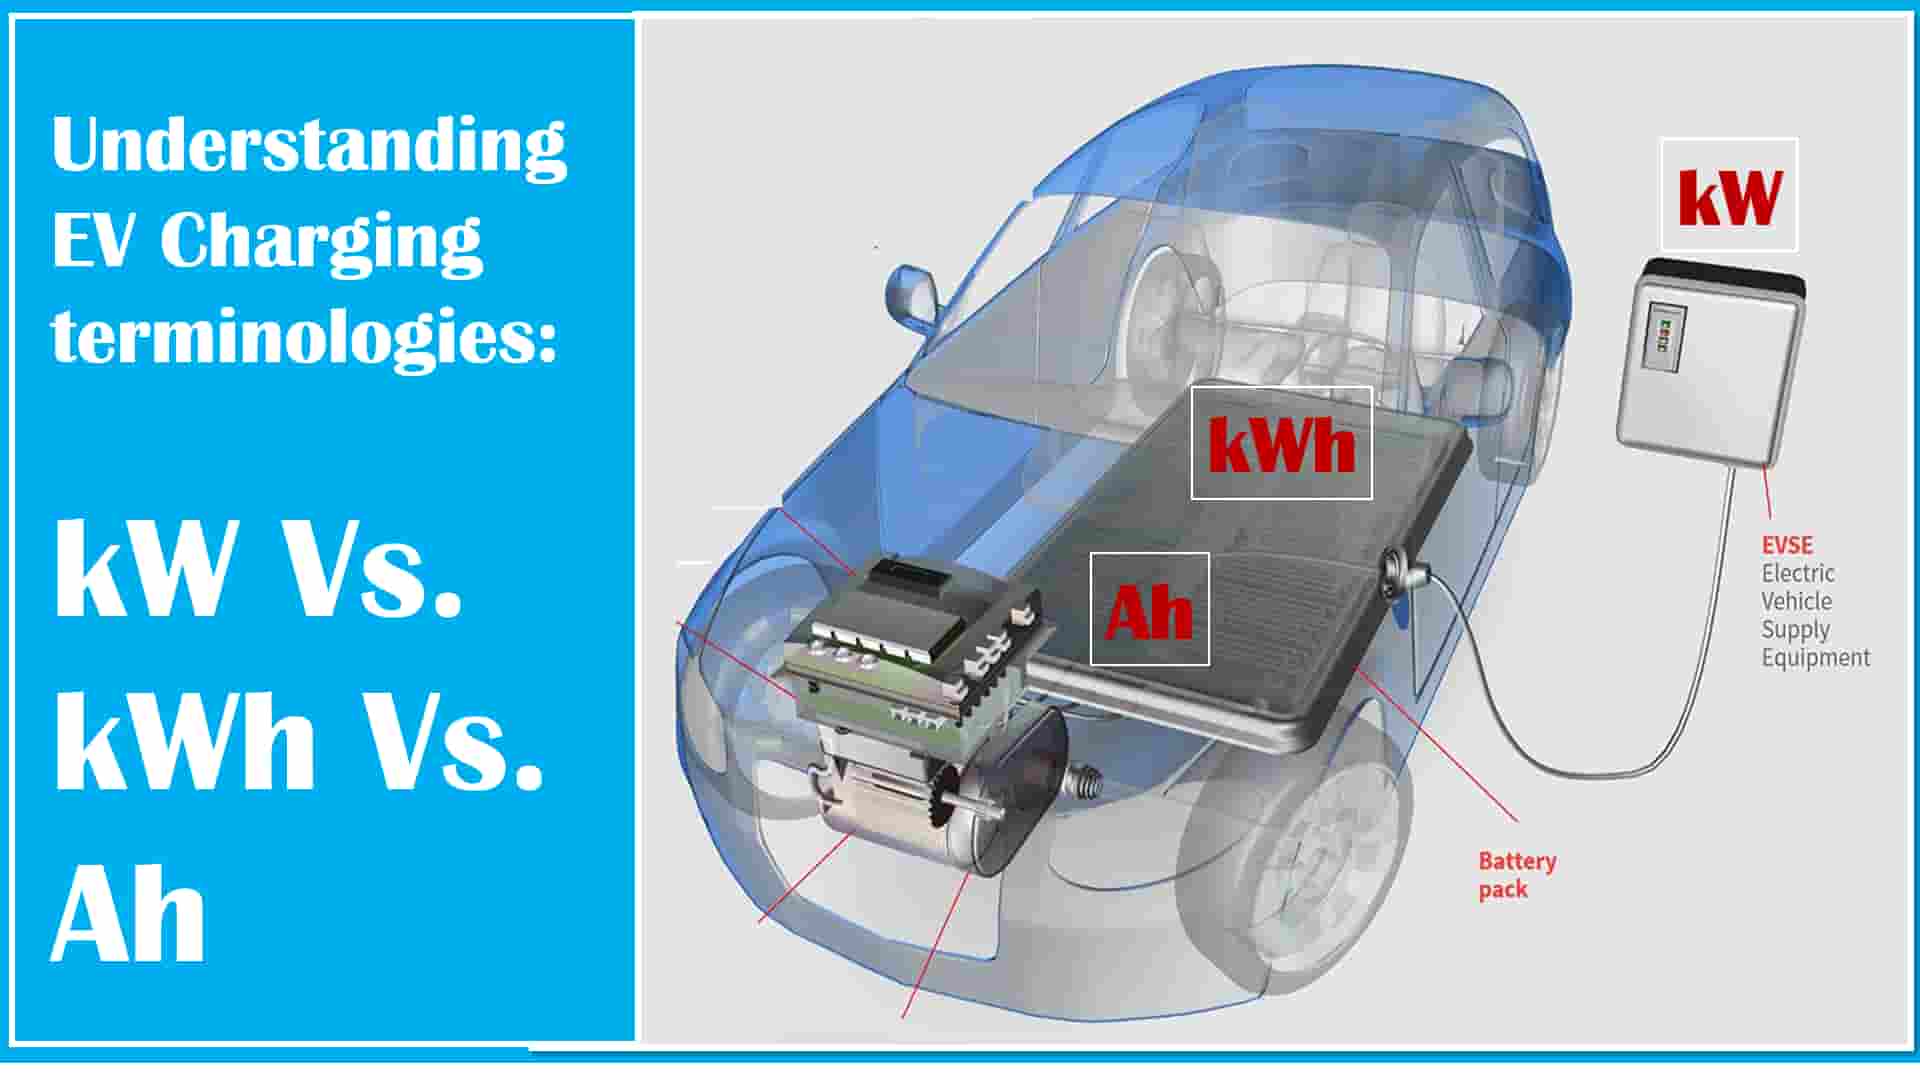 Understanding differences between kW kWh & Ah from EV charging perspective